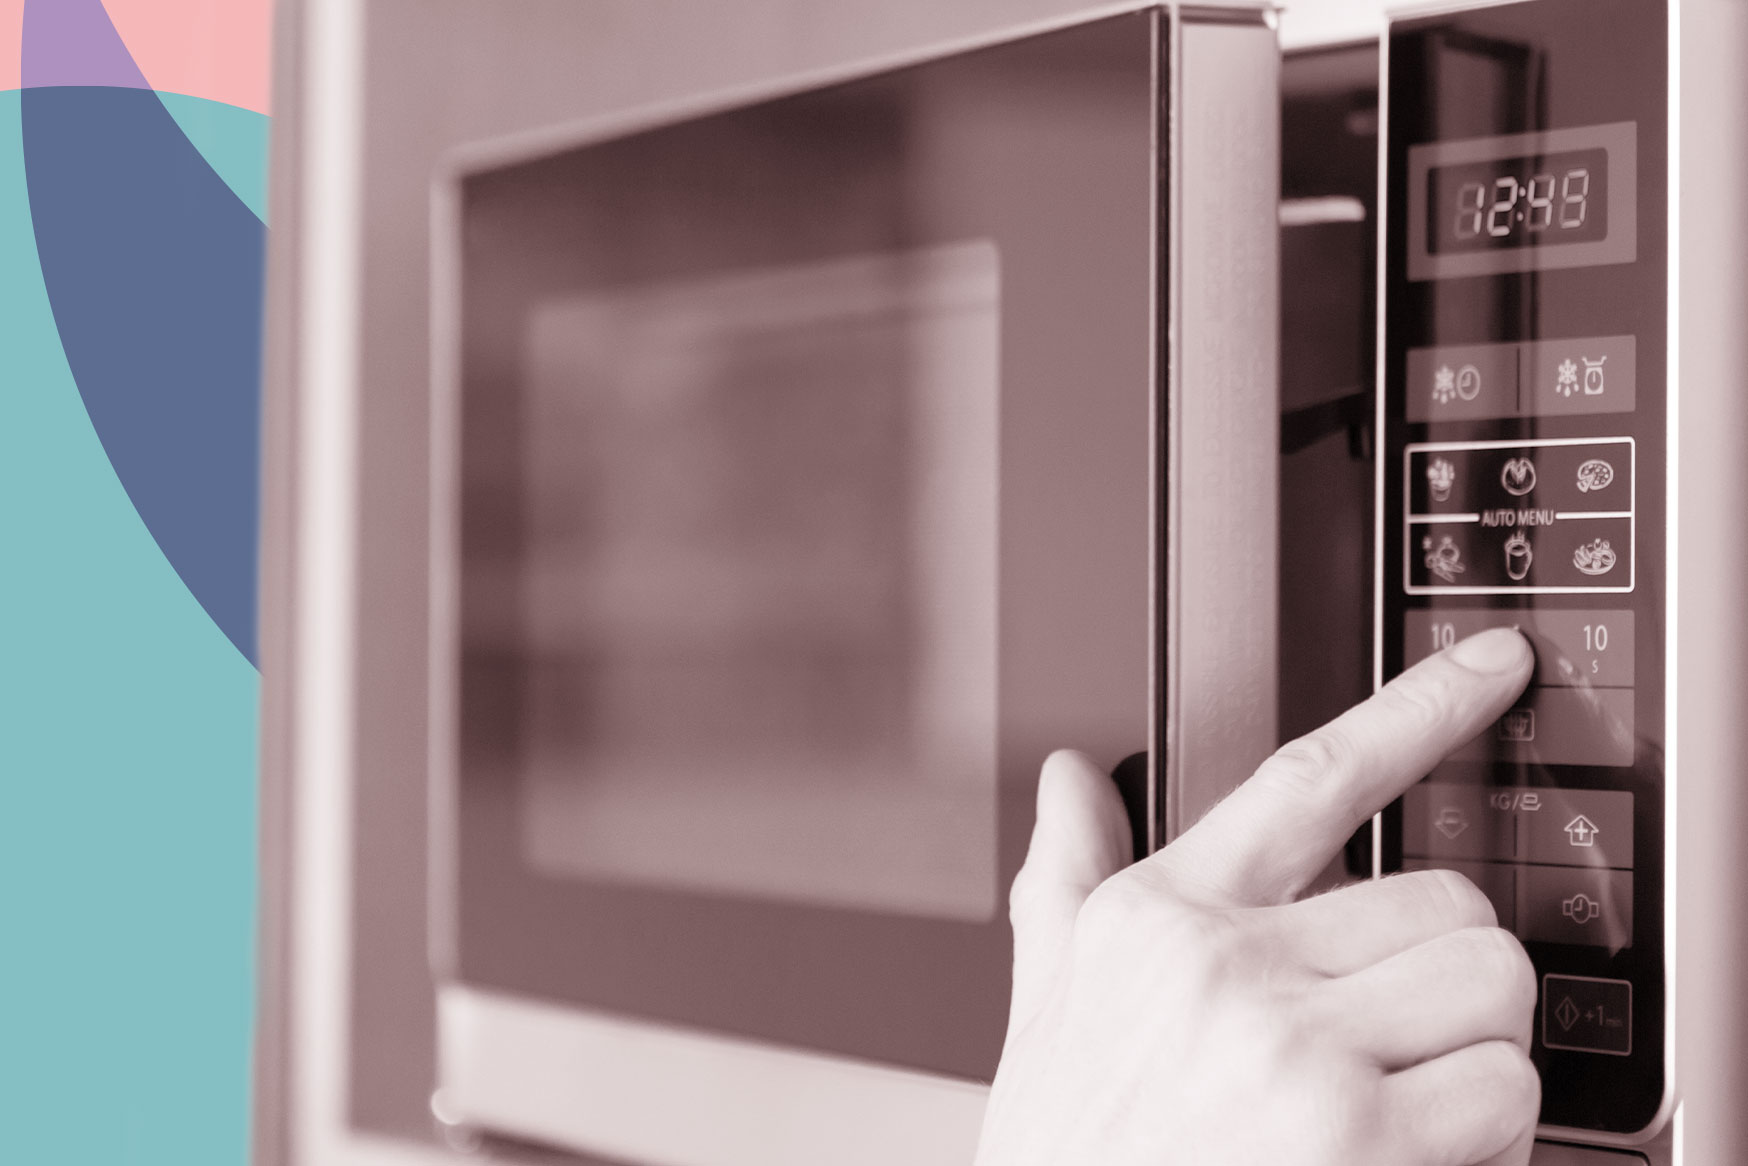 Microwave Cooking Tricks To Make Food Tastier